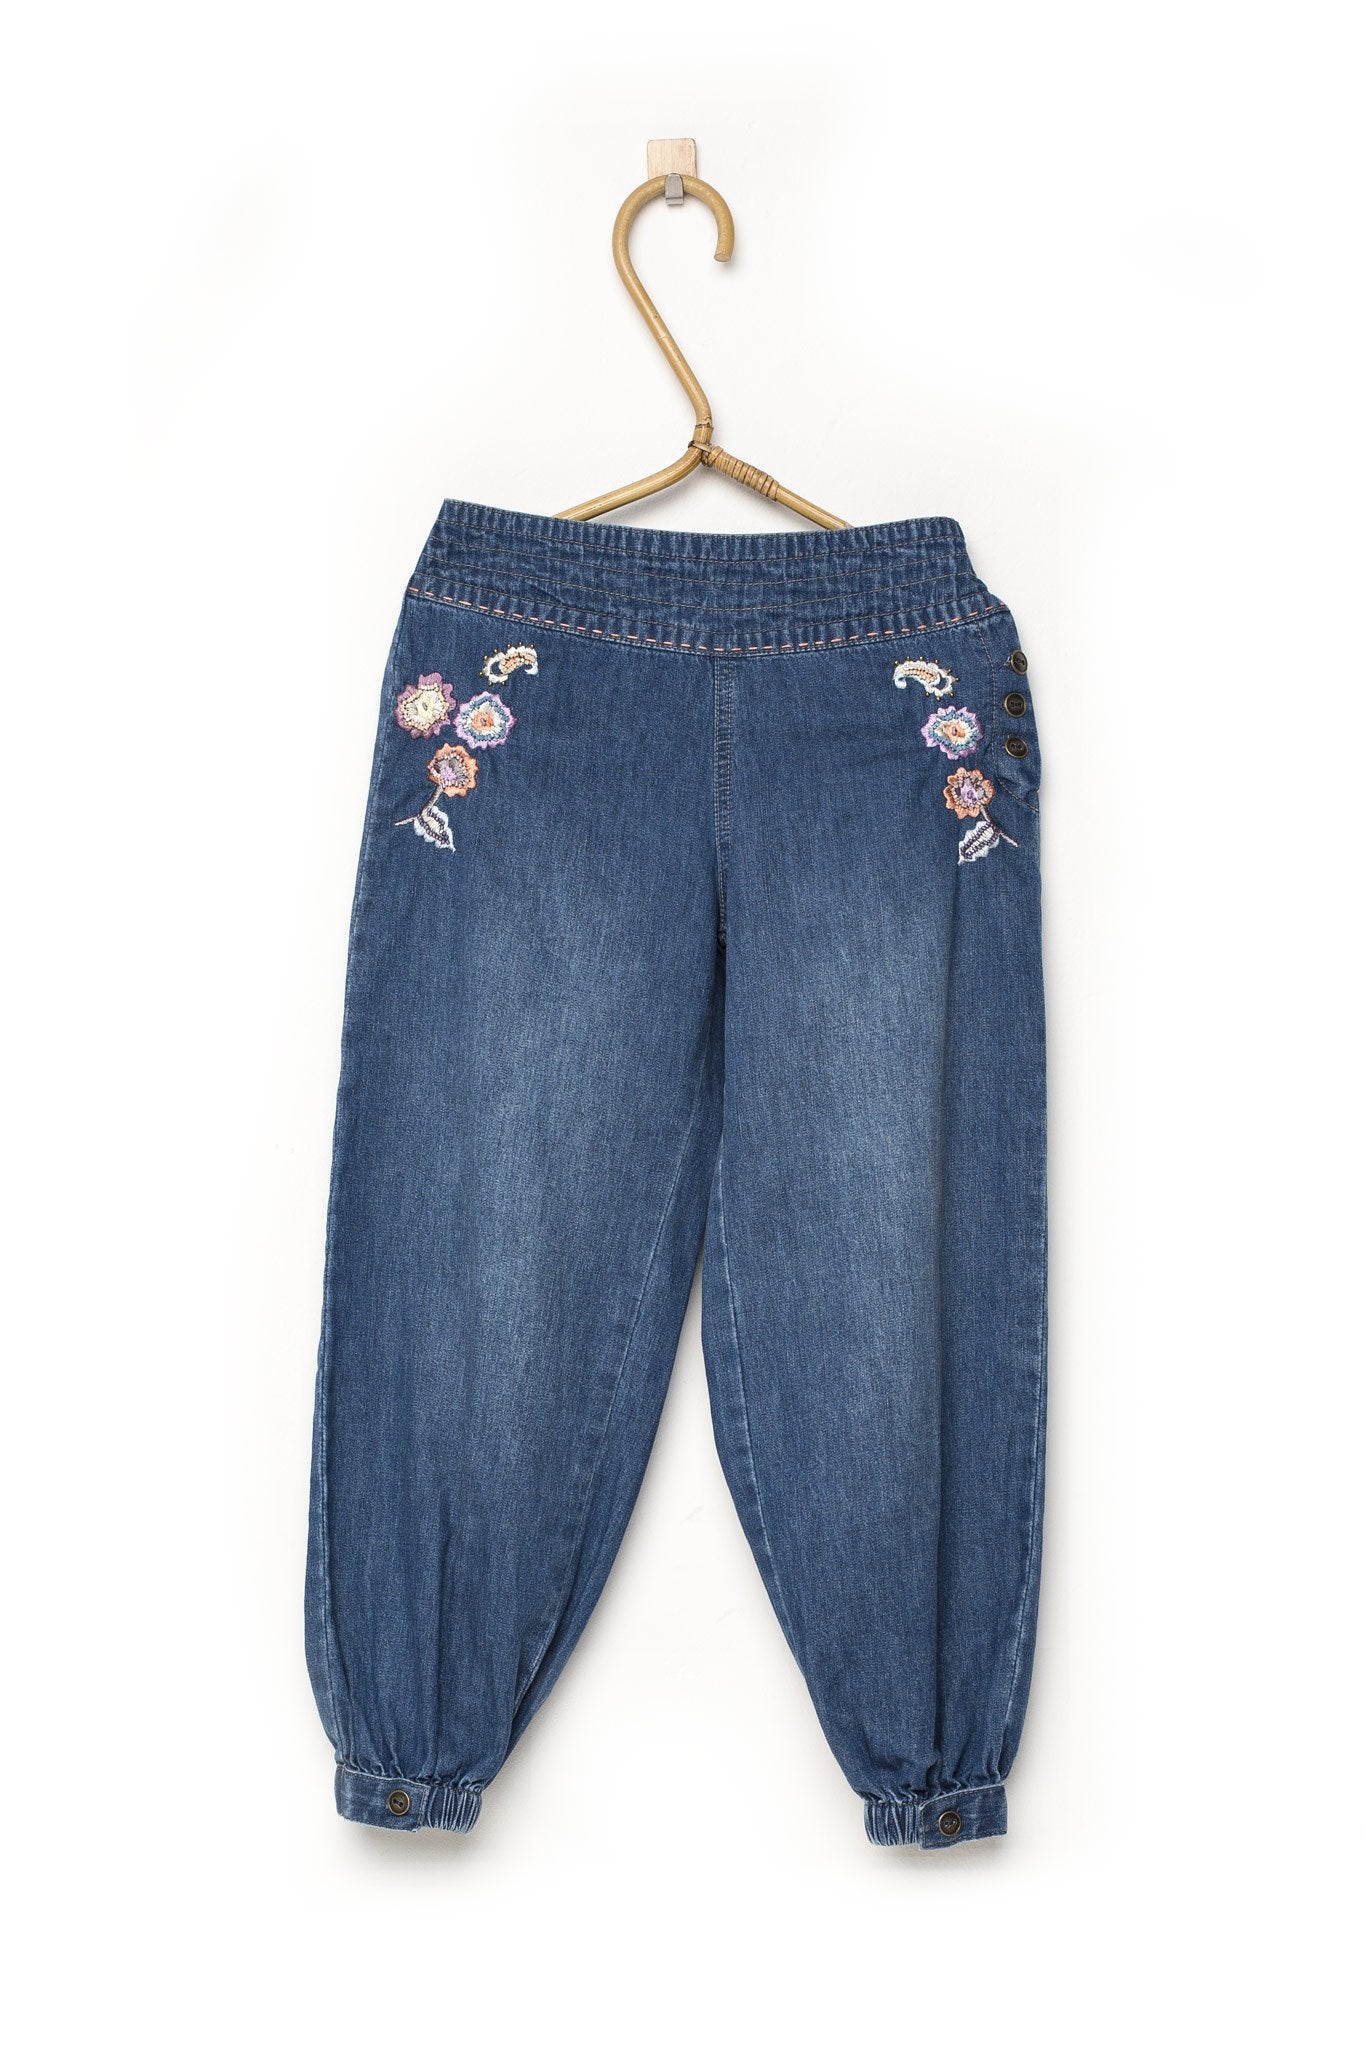 Kids Vintage Jeans Pants